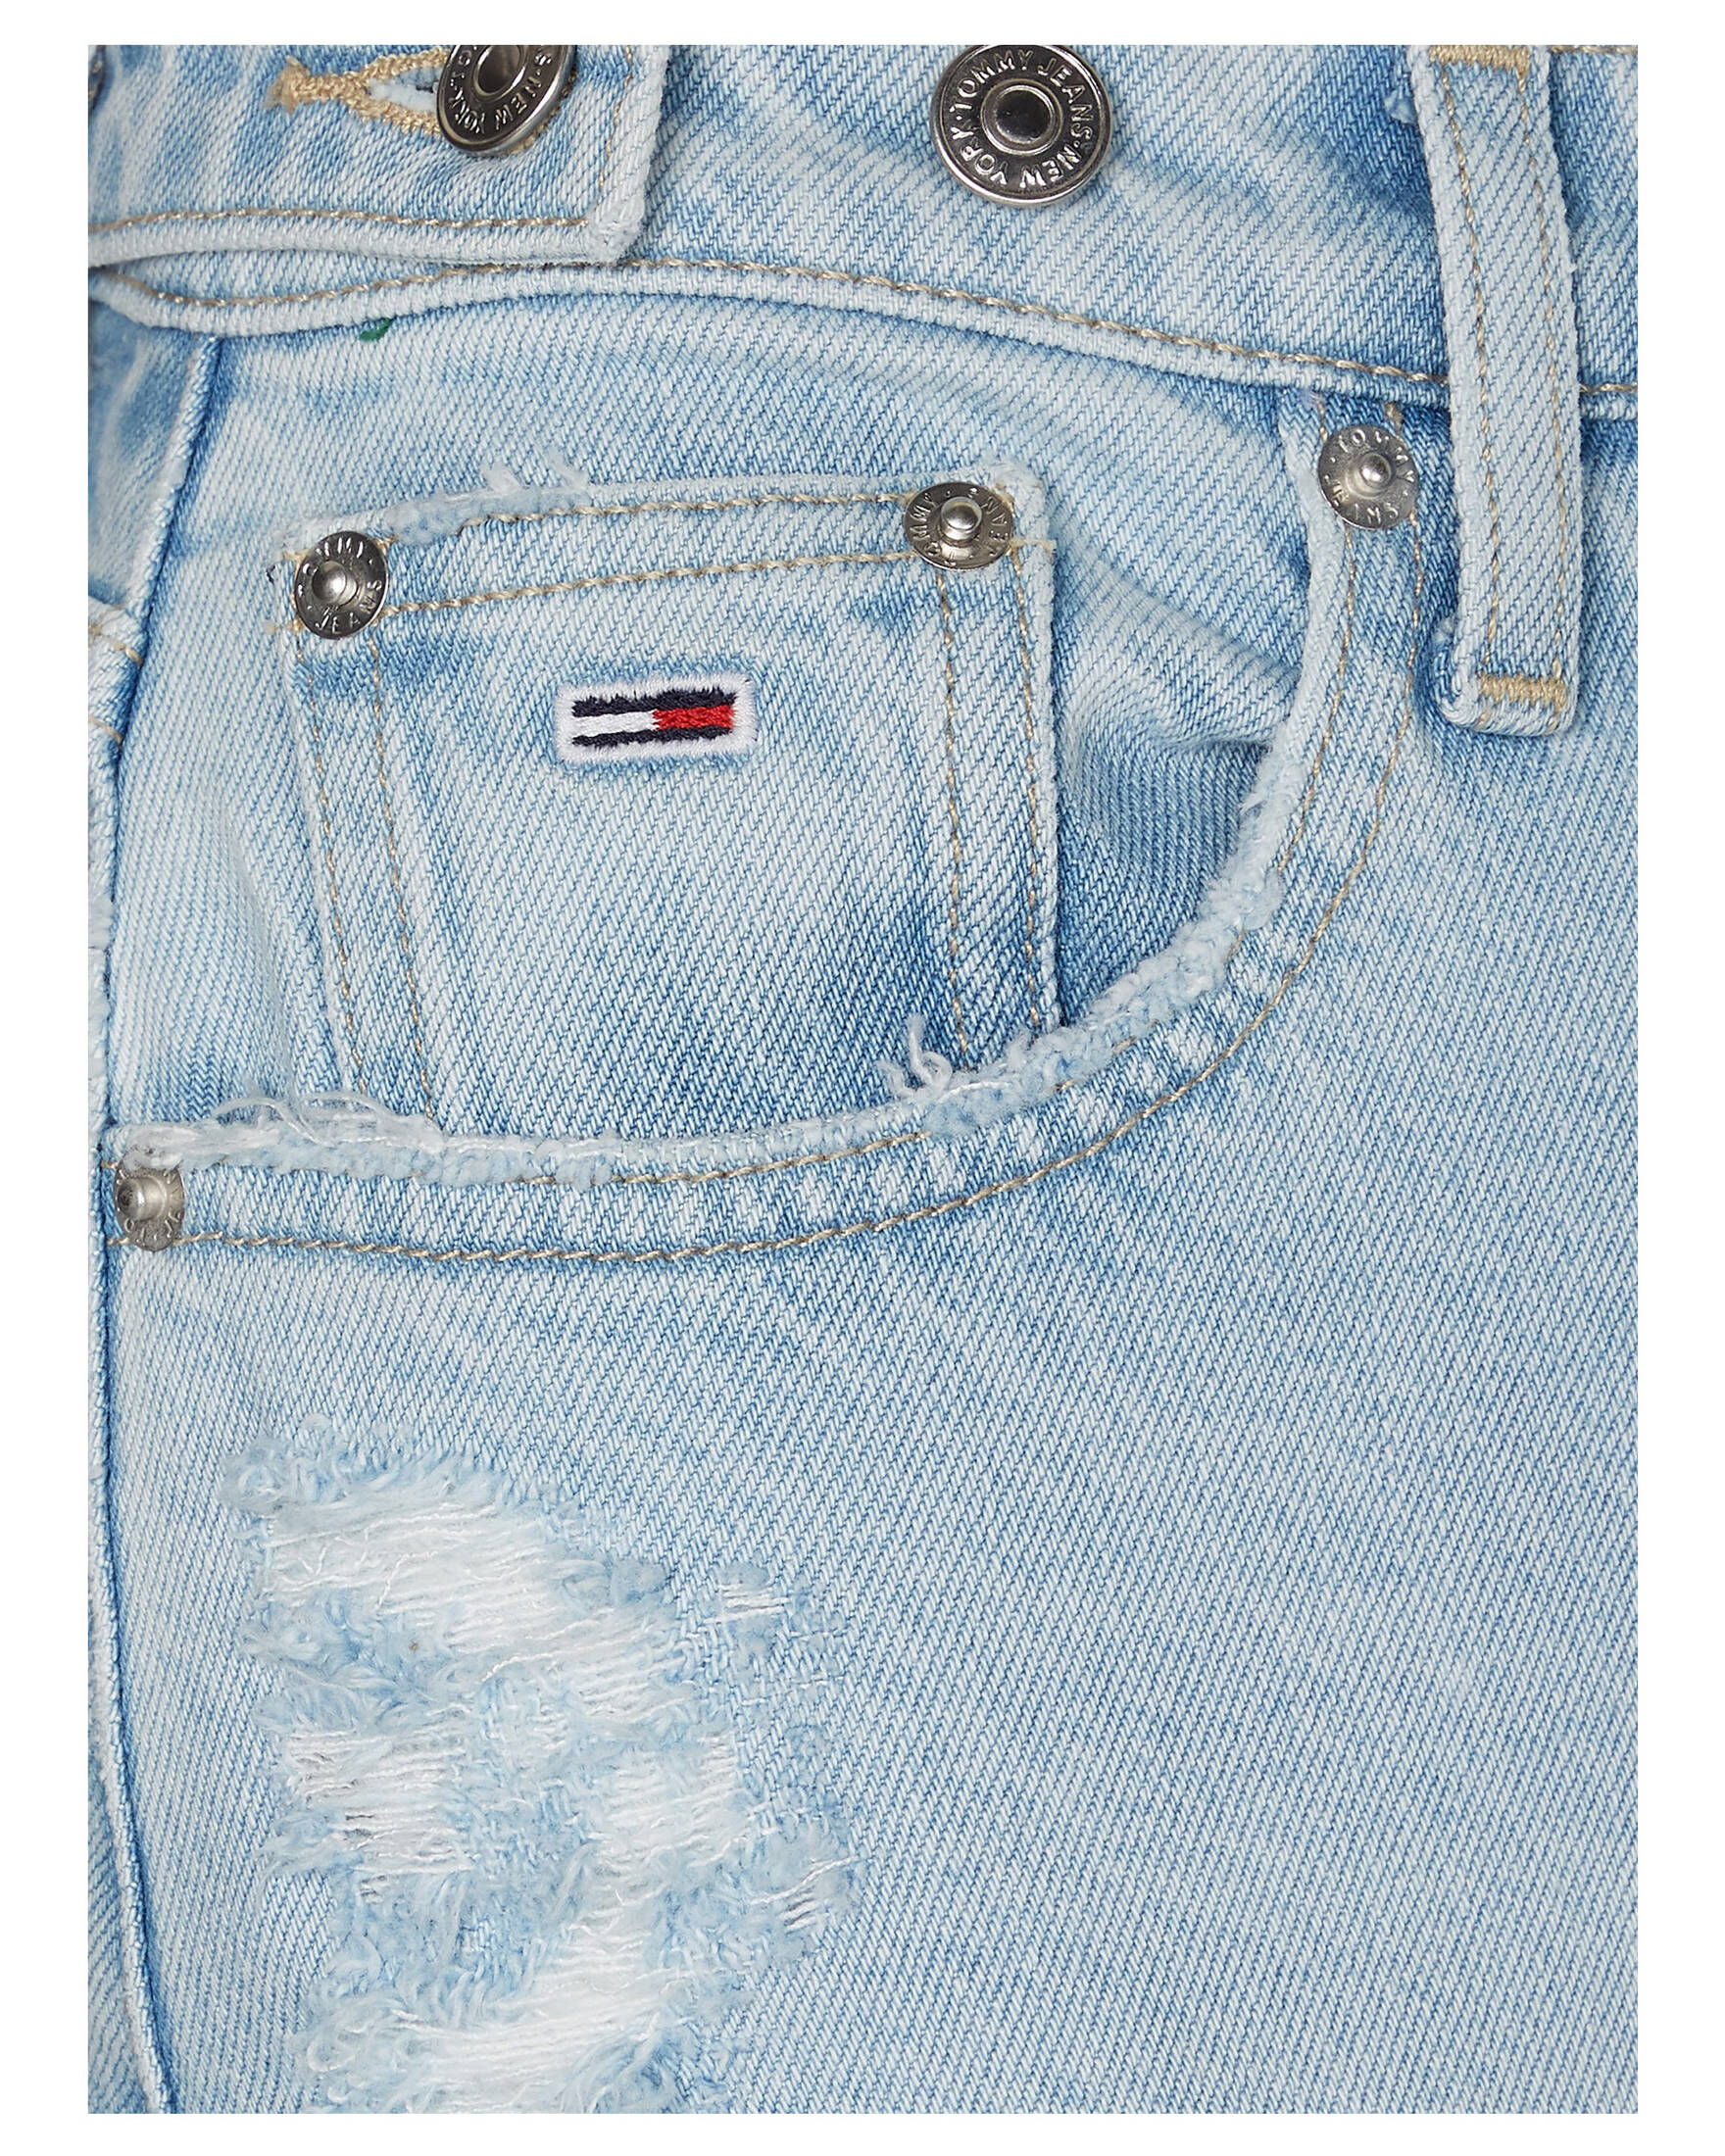 Jeans engelhorn | Damen MOM SKIRT Tommy kaufen Jeansrock